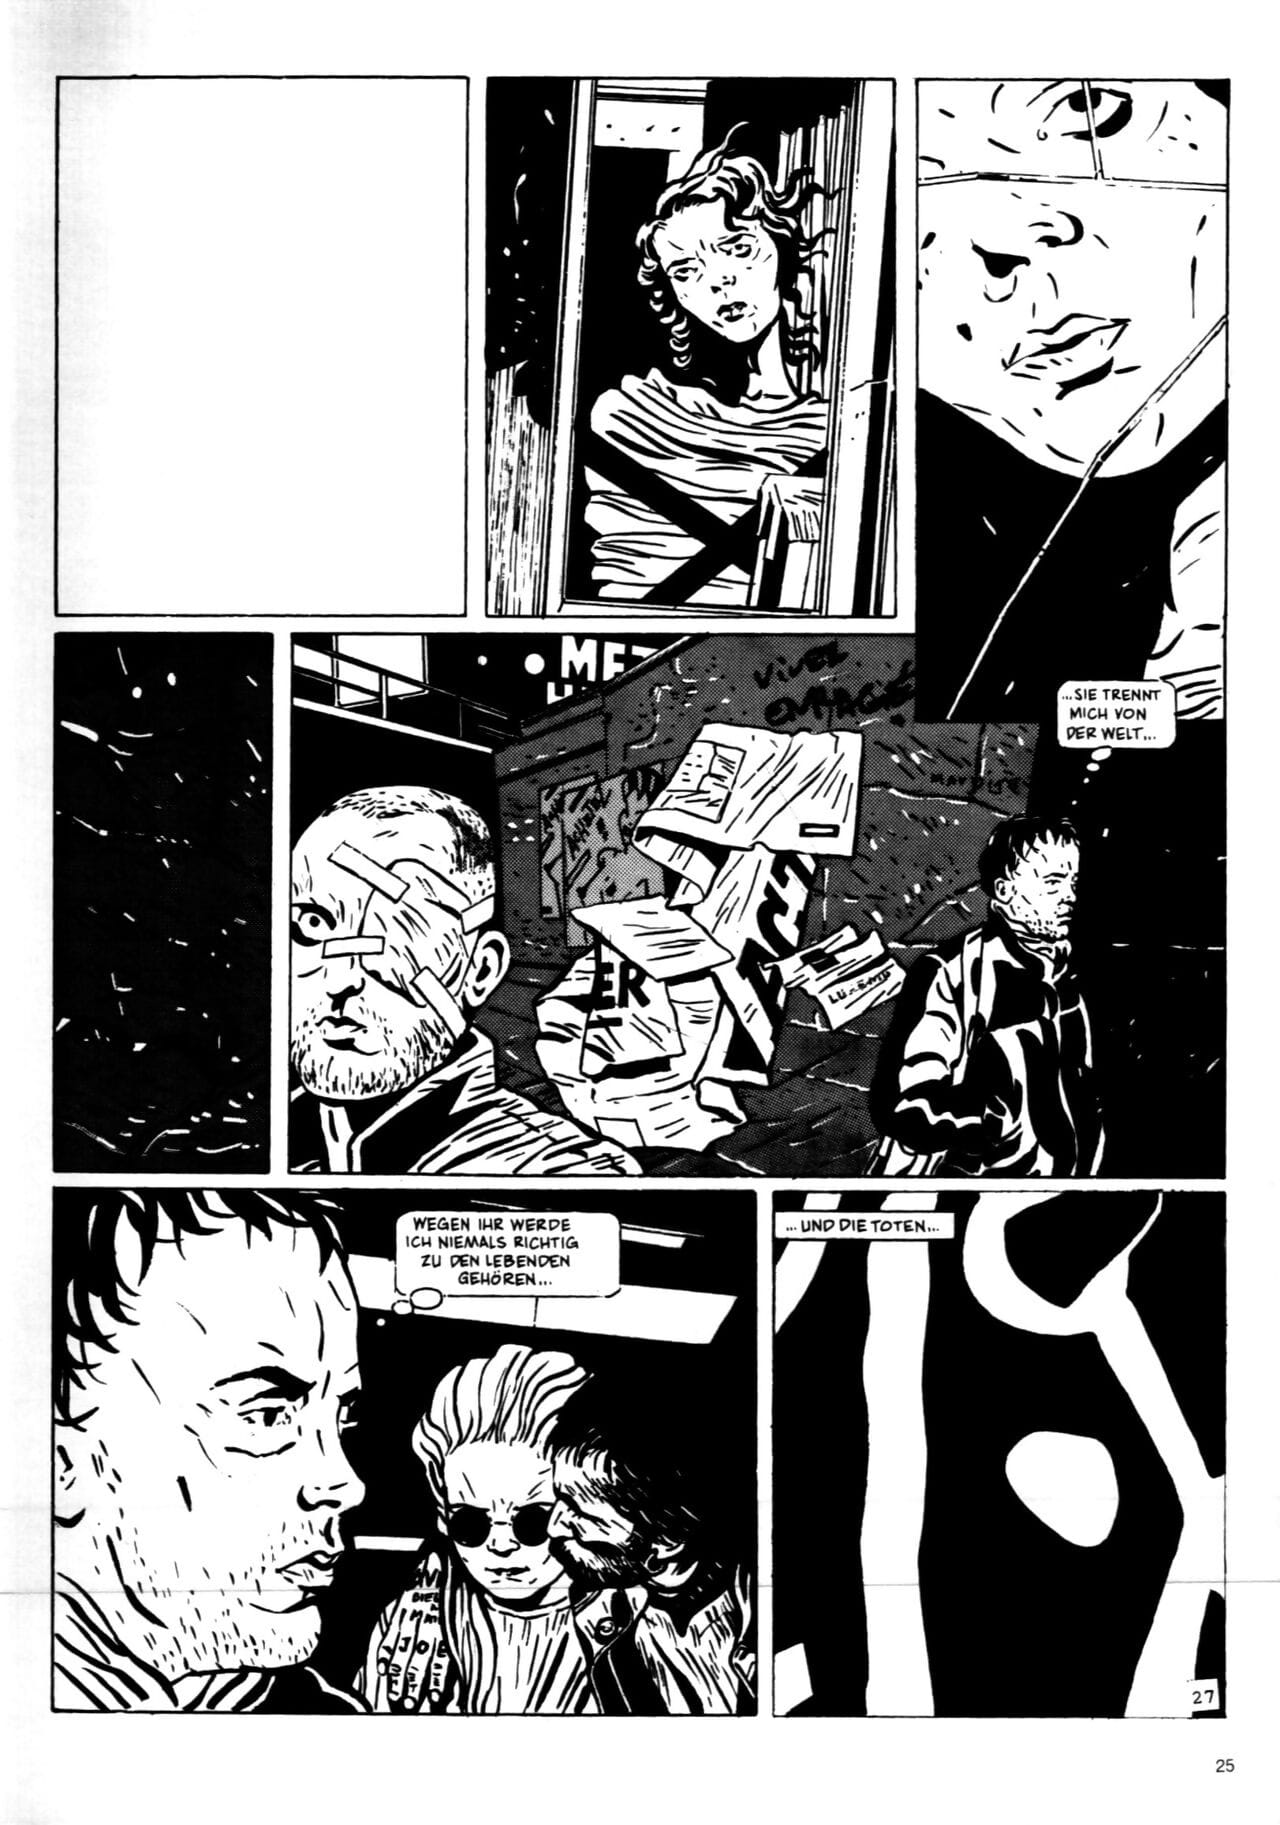 schwermetall #095 page 1